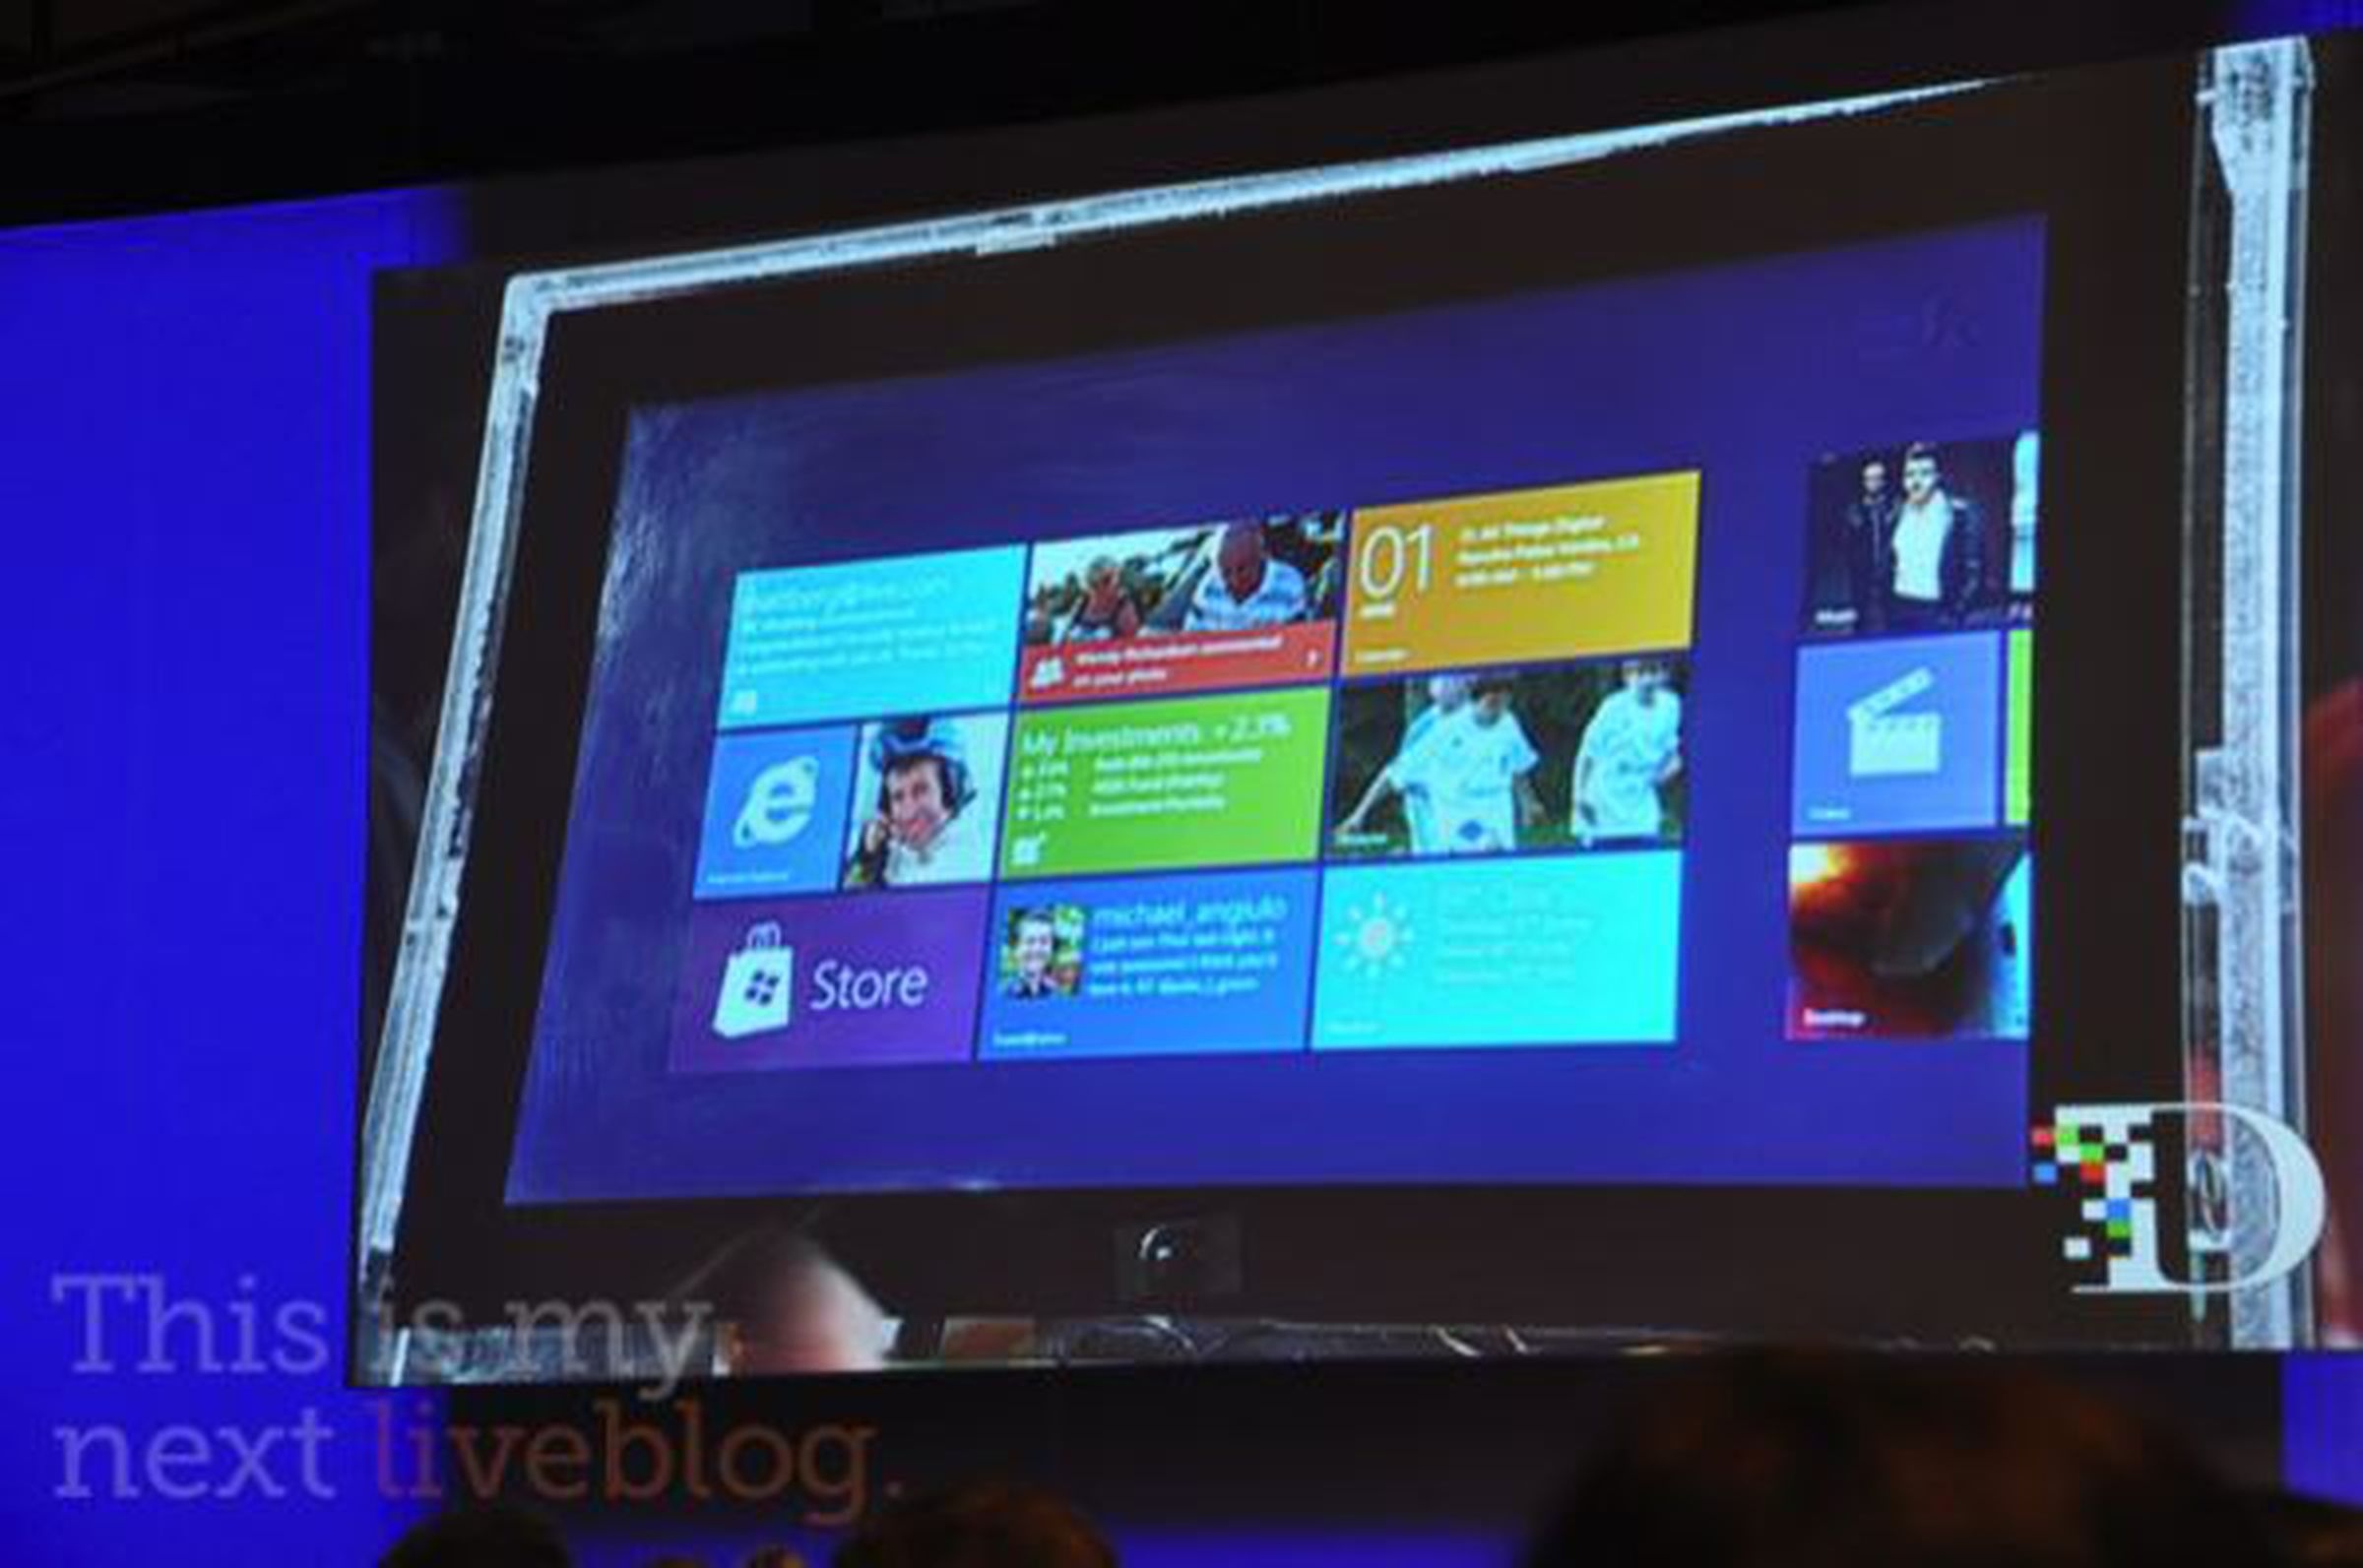 Windows 8 shown at D9